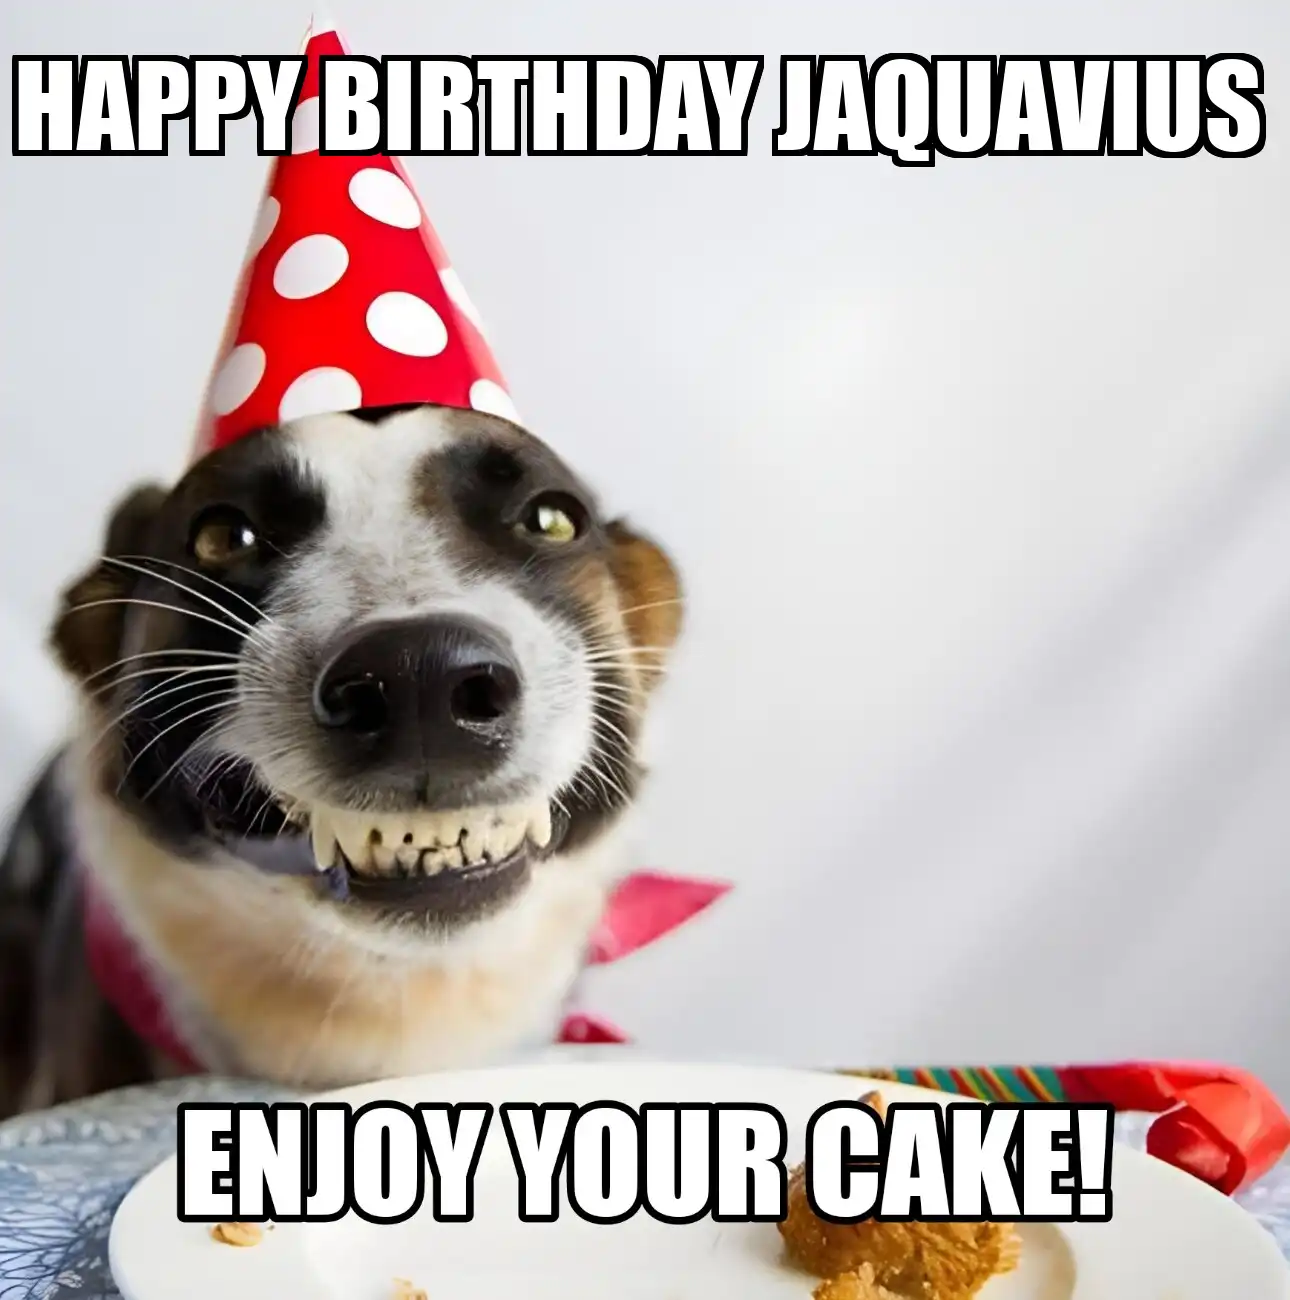 Happy Birthday Jaquavius Enjoy Your Cake Dog Meme